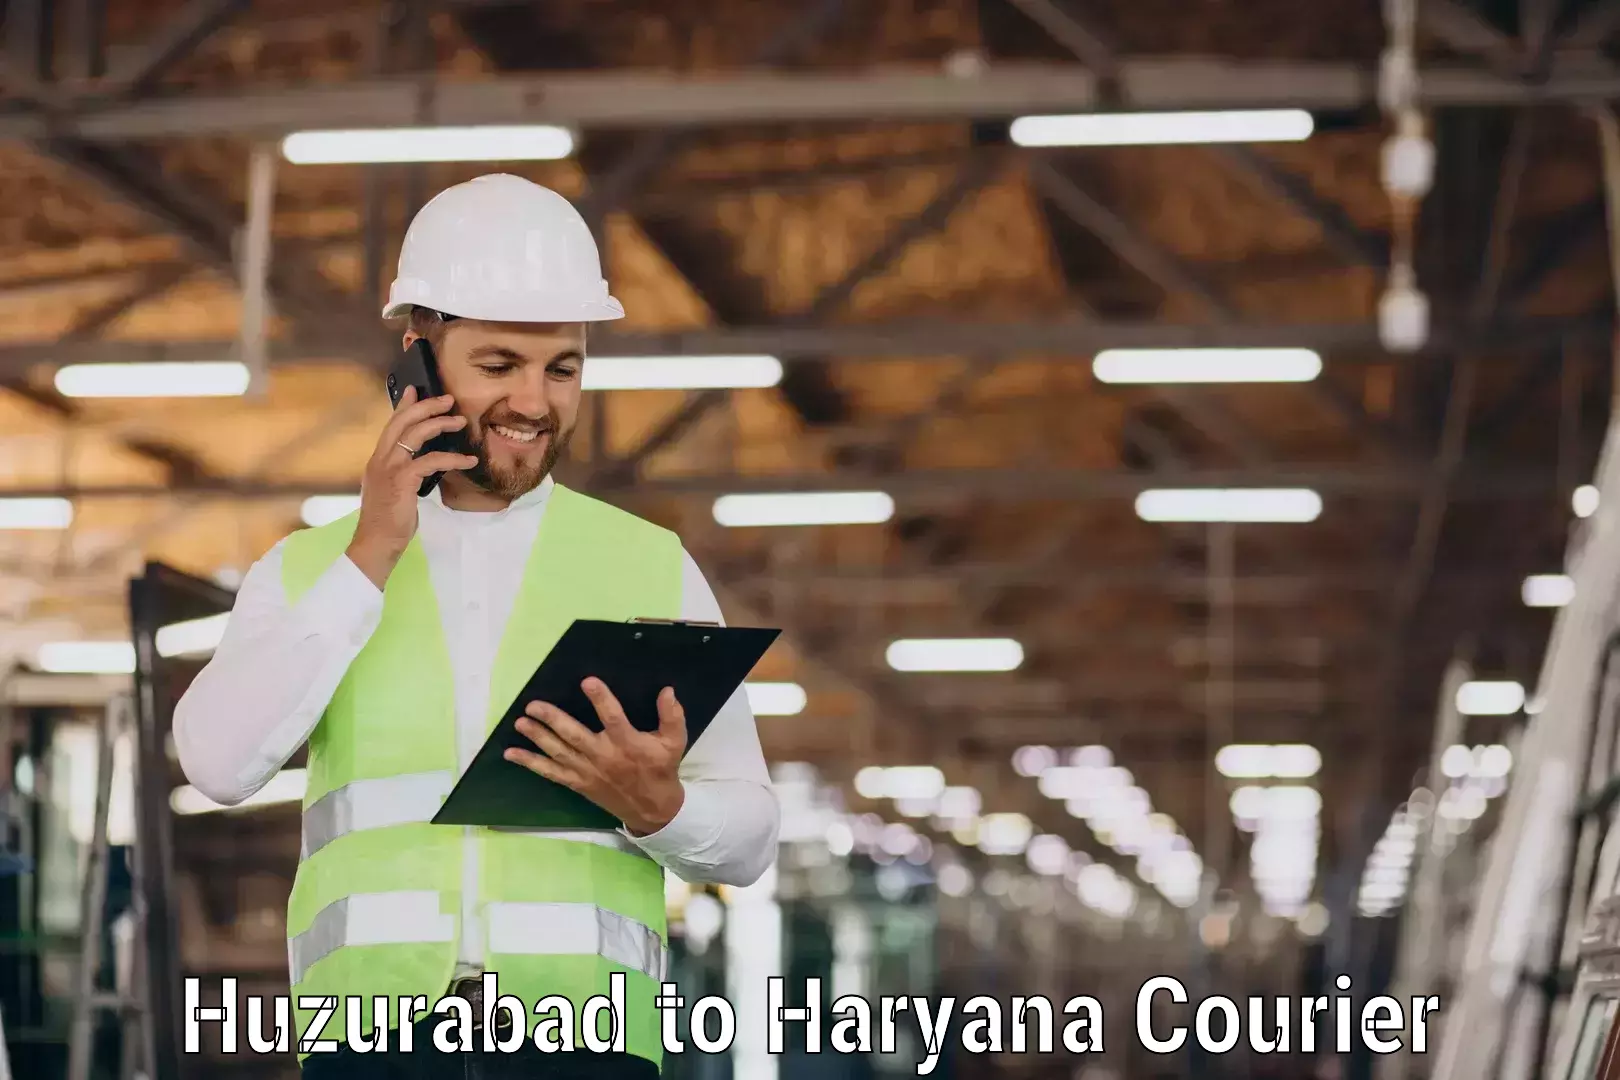 On-call courier service Huzurabad to Gurgaon